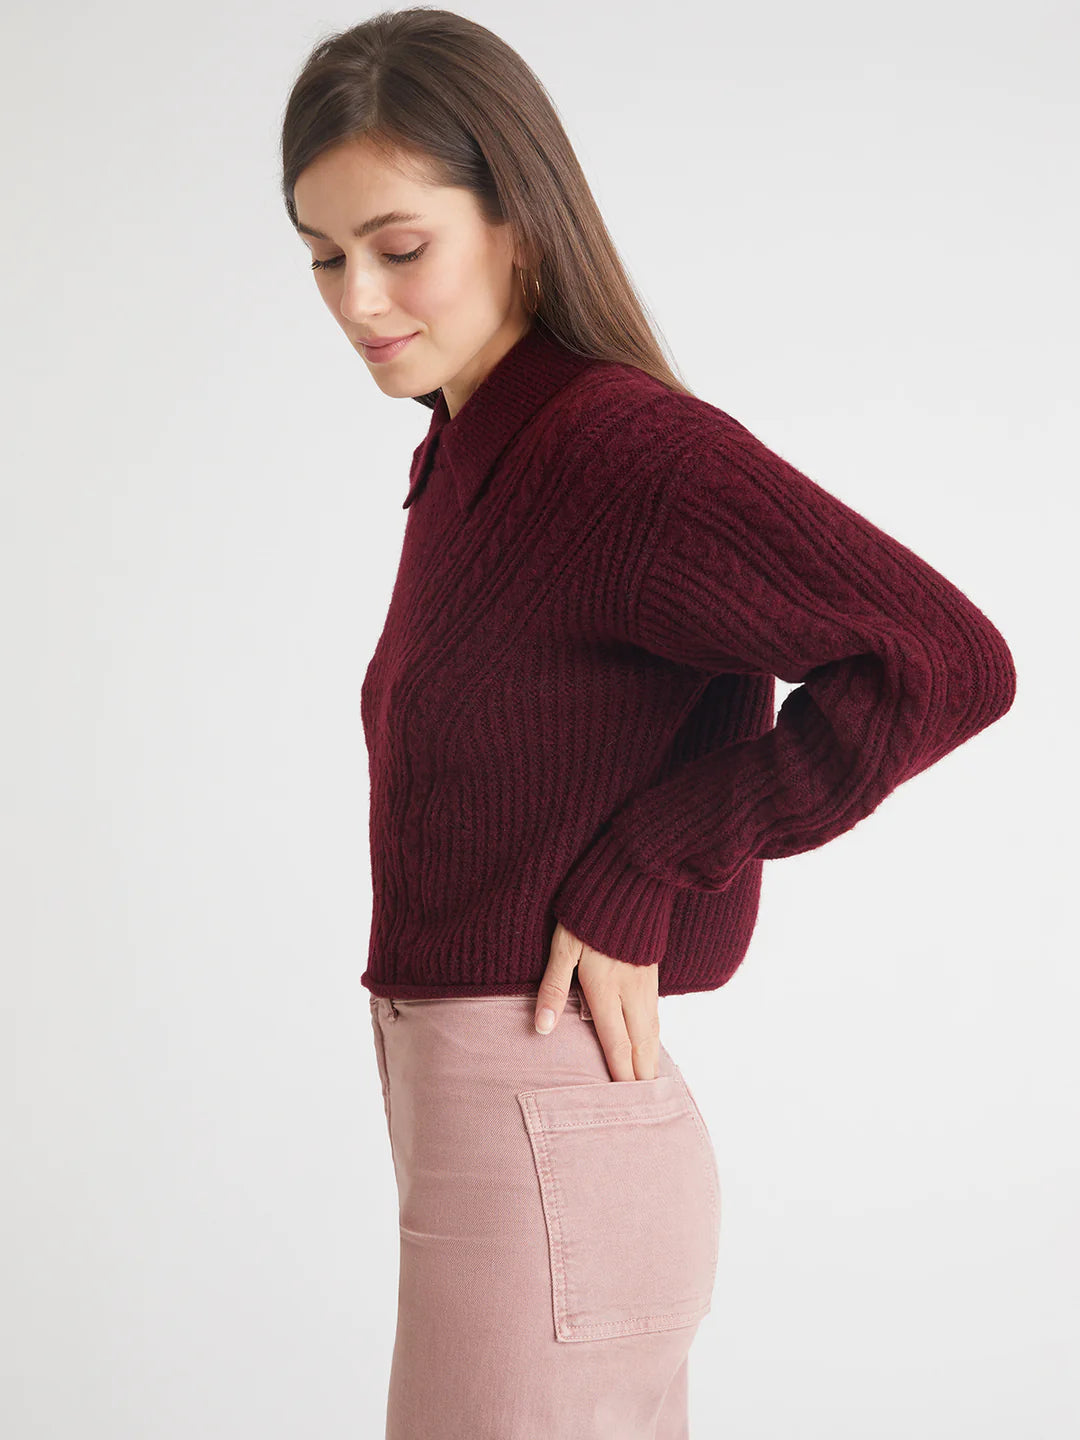 Alecia Polo Sweater